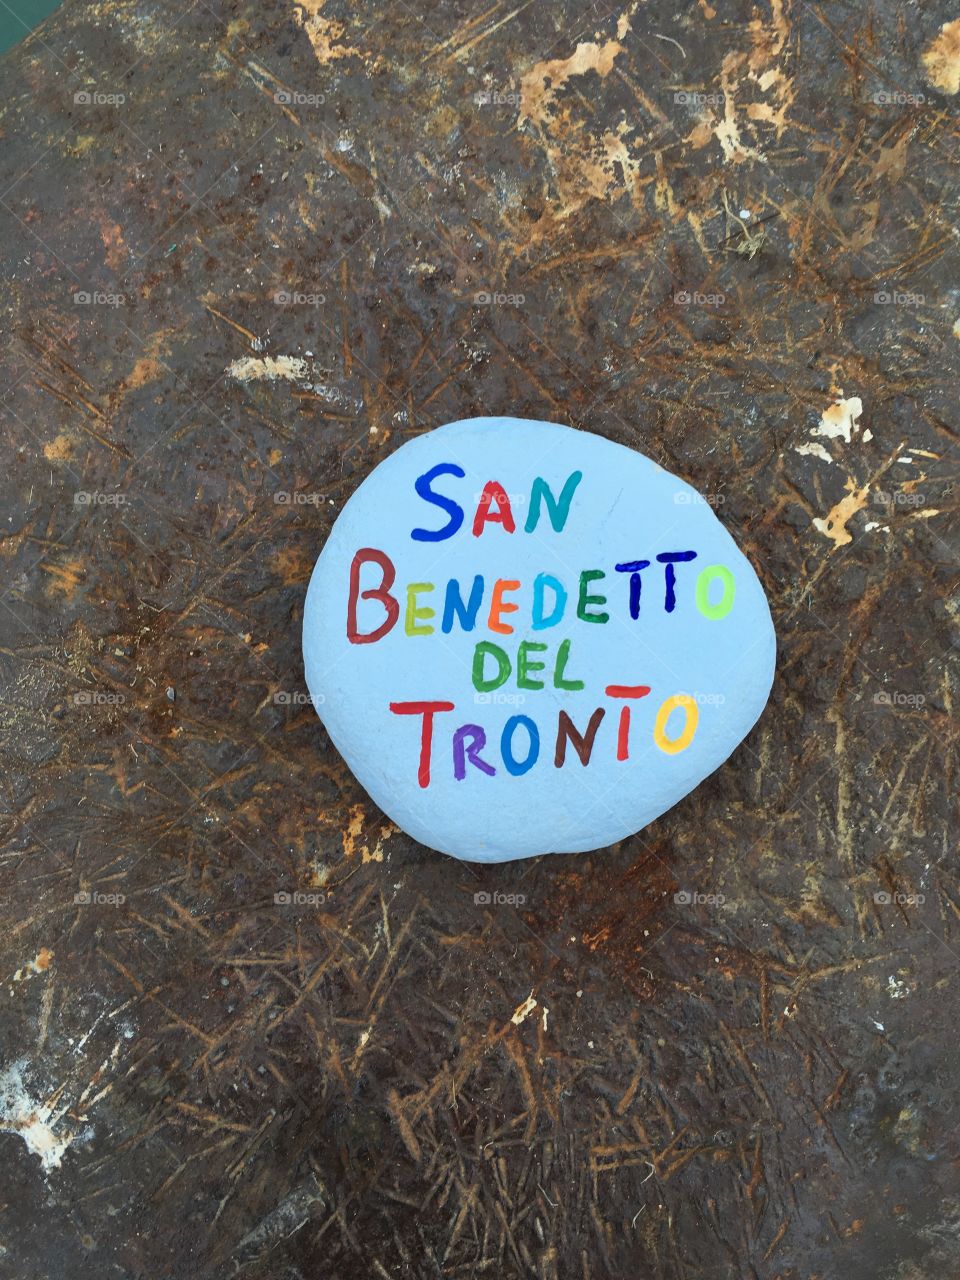 San Benedetto del Tronto, souvenir on a carved stone over a rusty bollard